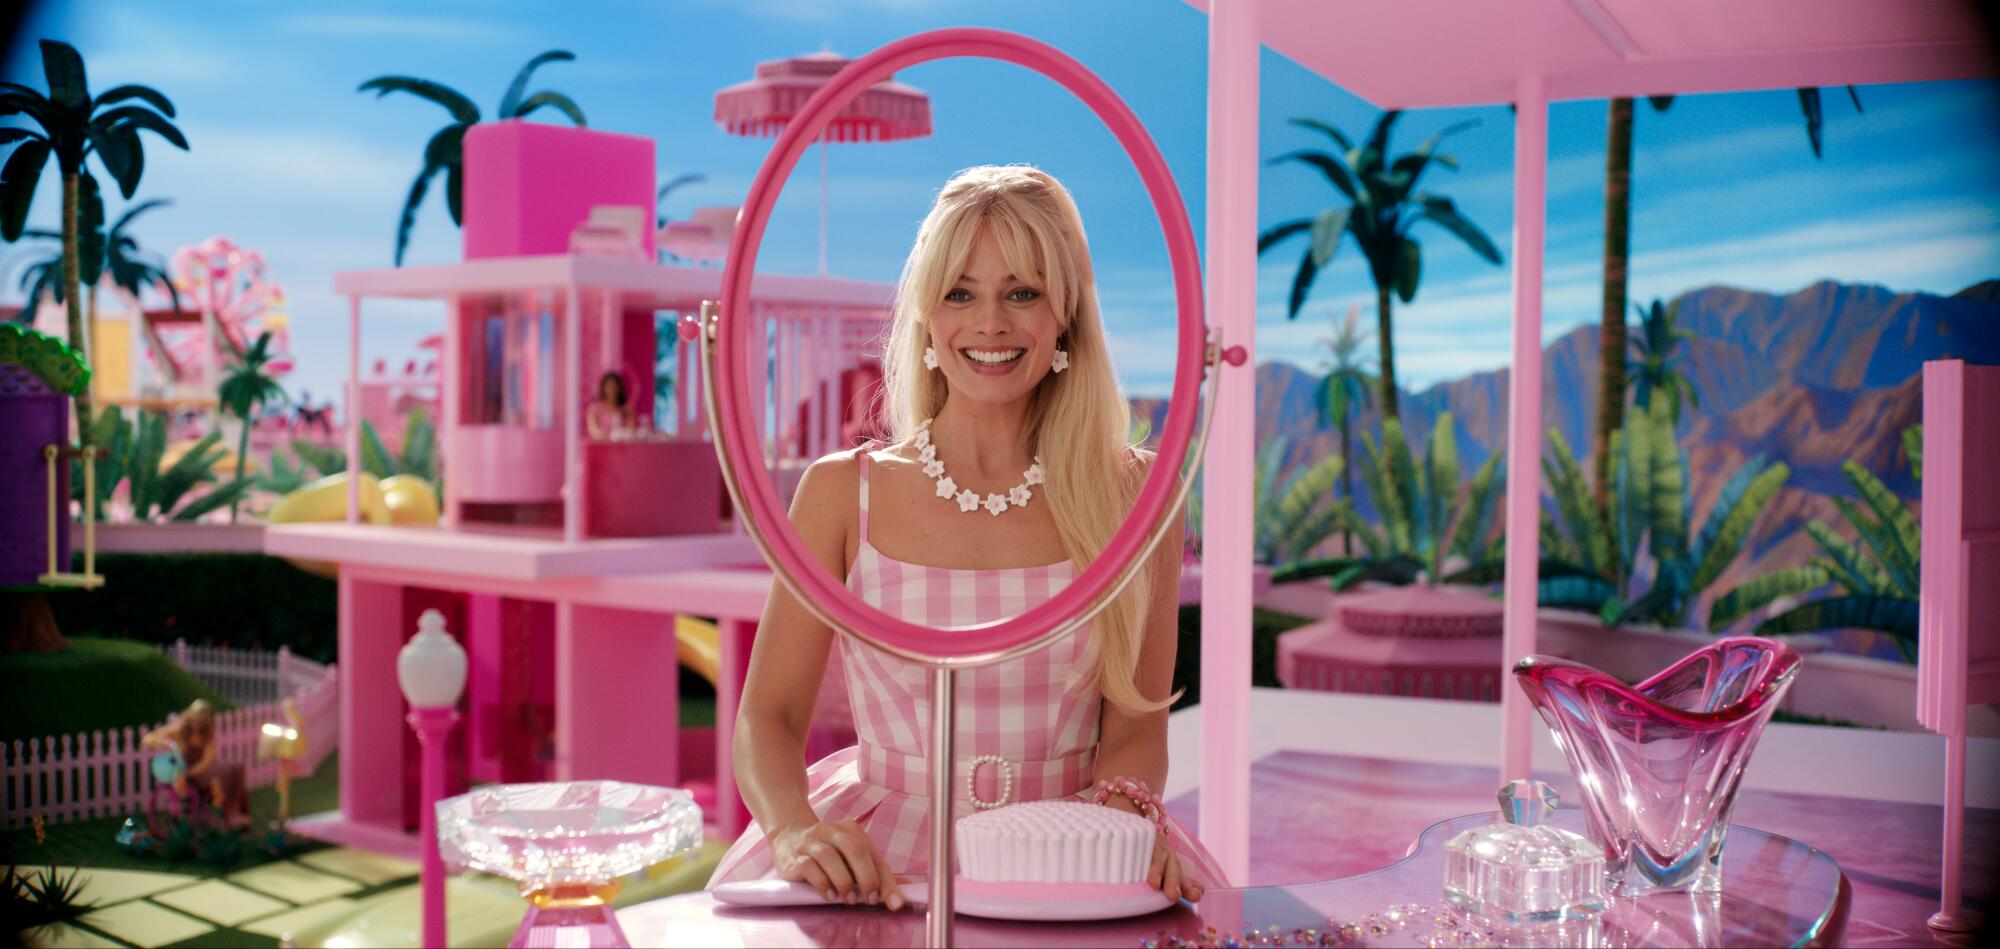 Margot Robbie as Barbie outside her Malibu dream home.